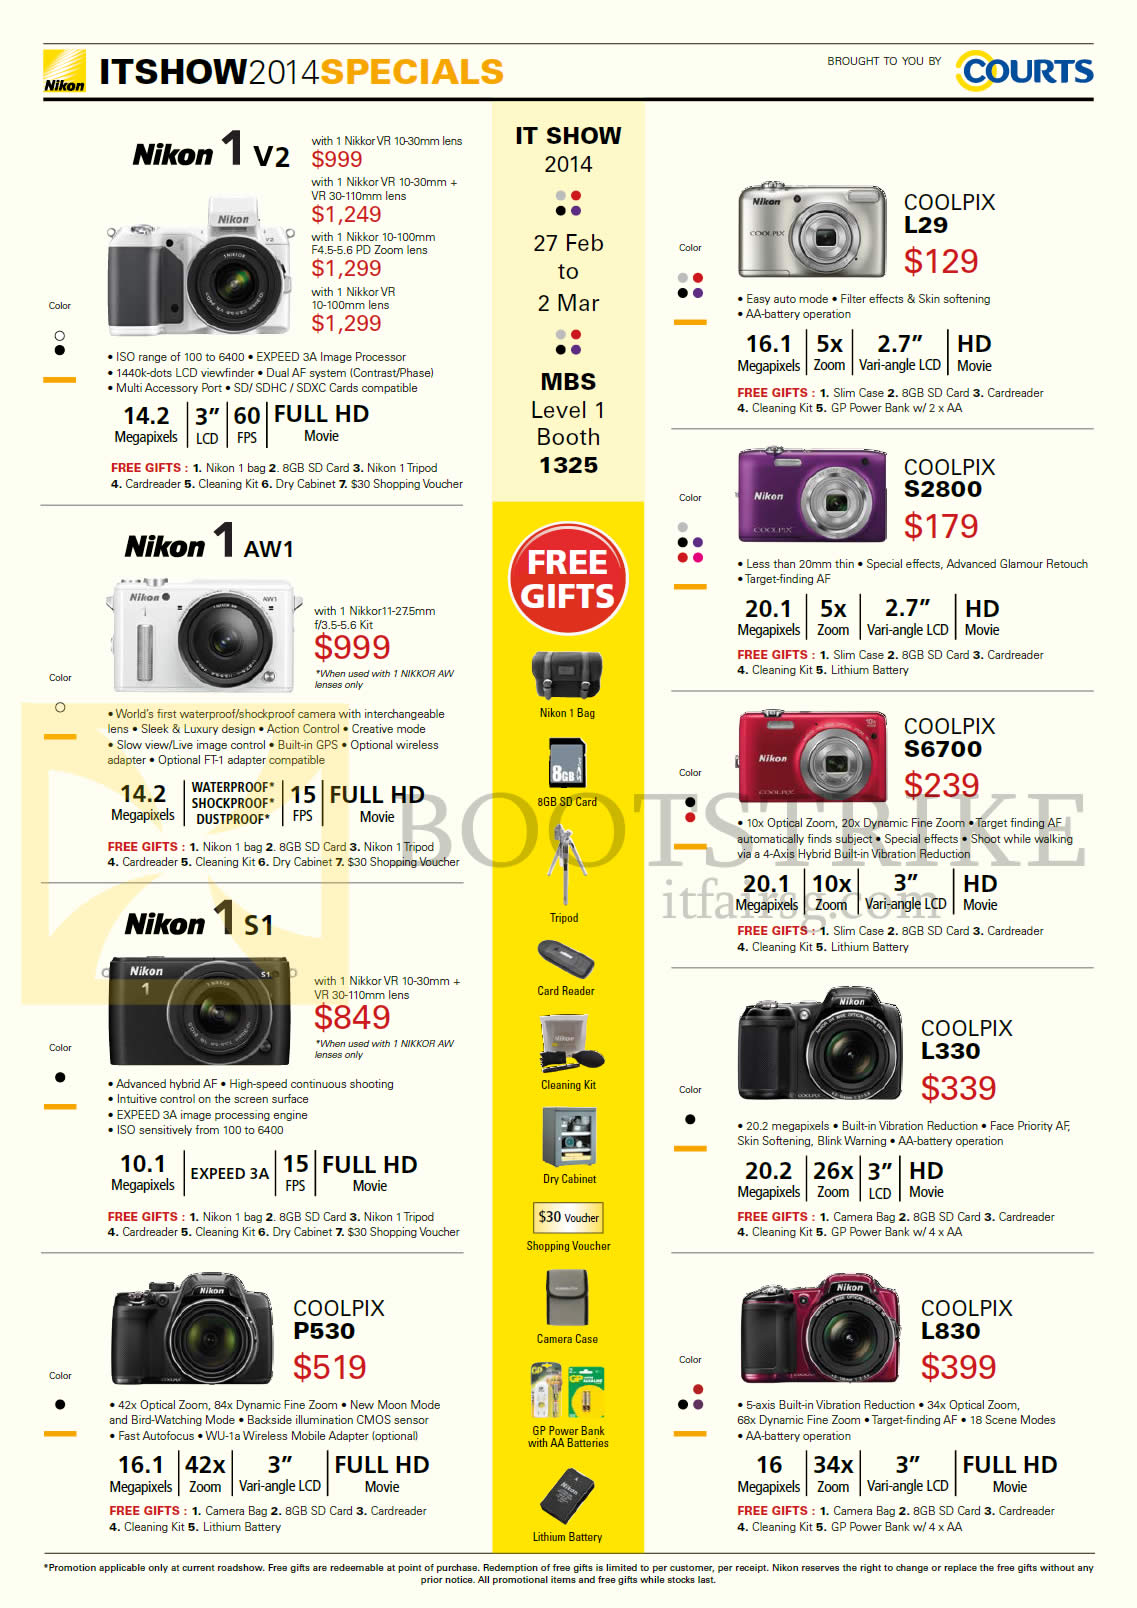 IT SHOW 2014 price list image brochure of Nikon Digital Cameras 1 V2, 1 AW1, 1 S1, Coolpix P530, L29, S2800, S6700, L330, L830